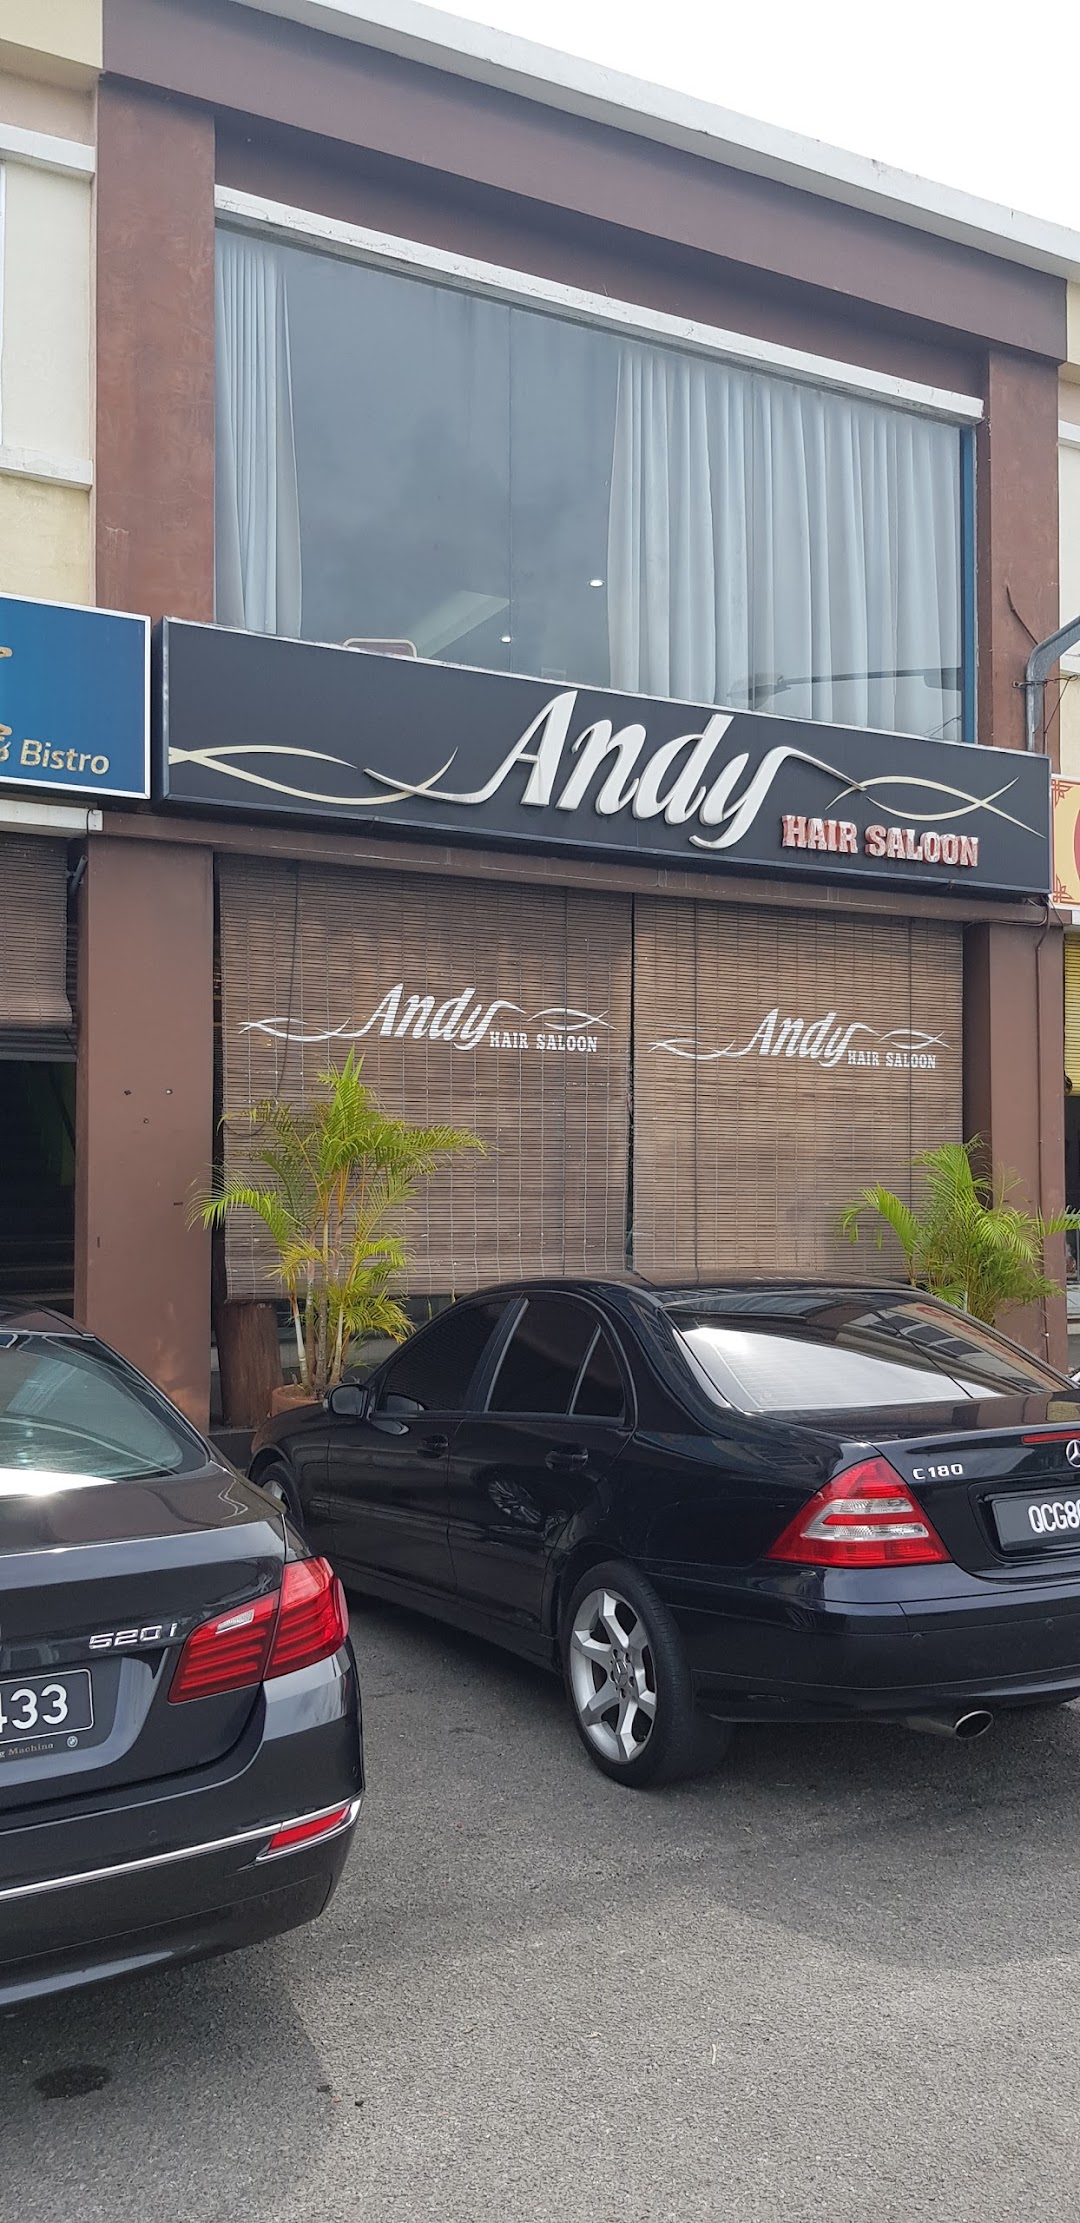 Andy Hair Saloon